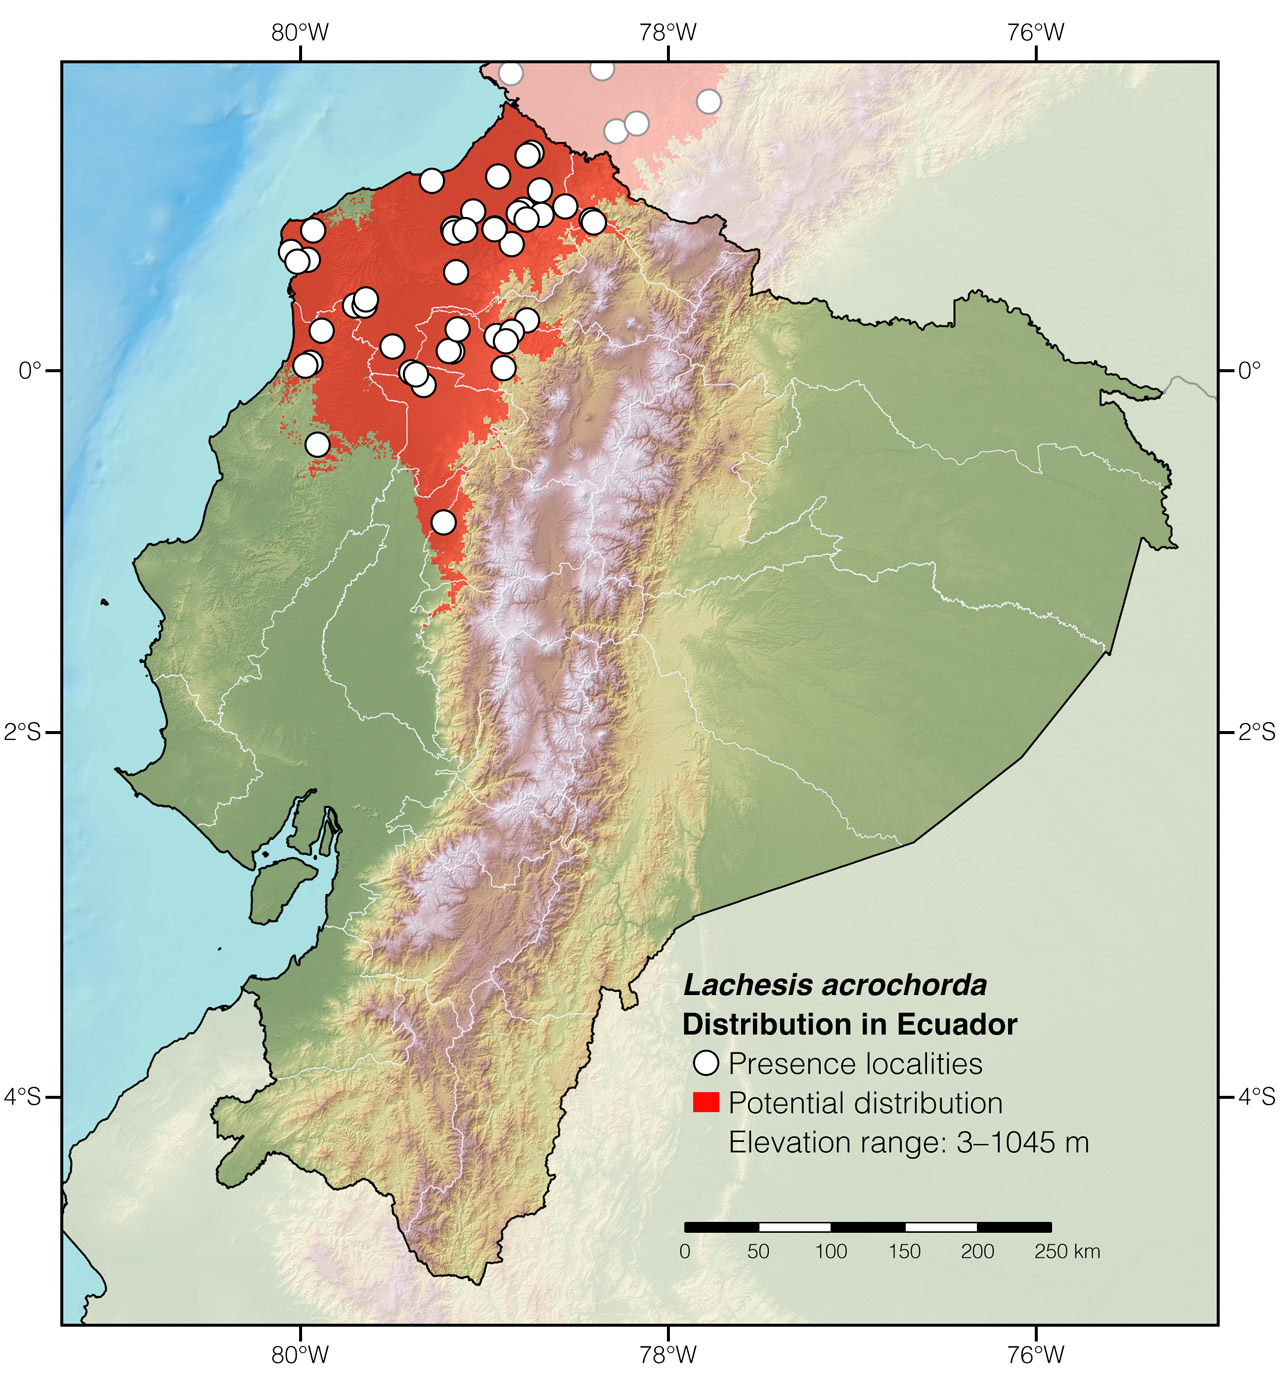 Distribution of Lachesis acrochorda in Ecuador